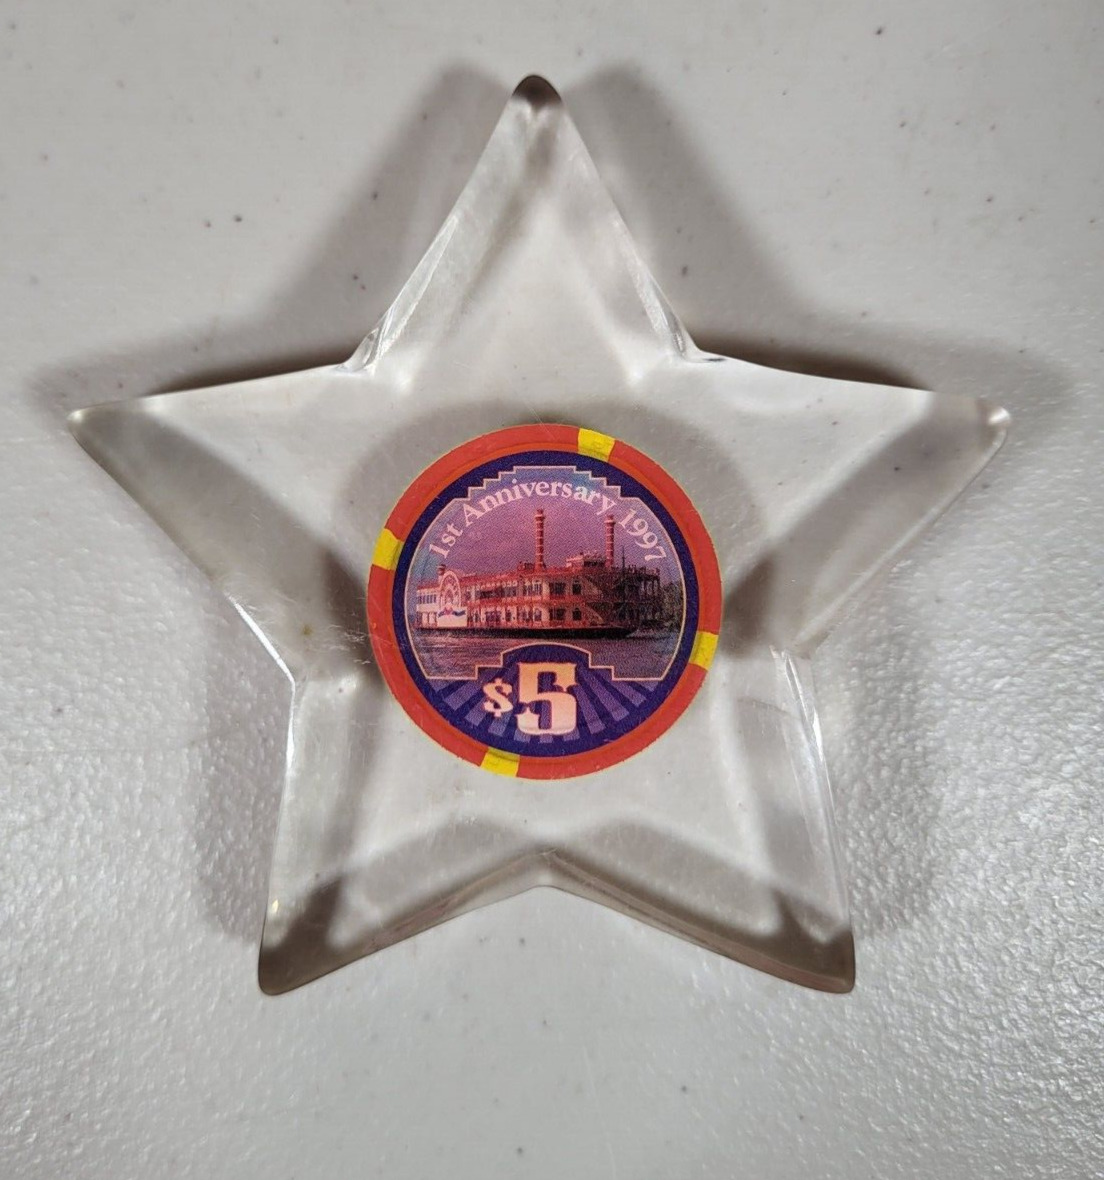 Ameristar Casino Council Bluffs Iowa 1997 1st Anniversary $5 Chip Star Plaque 